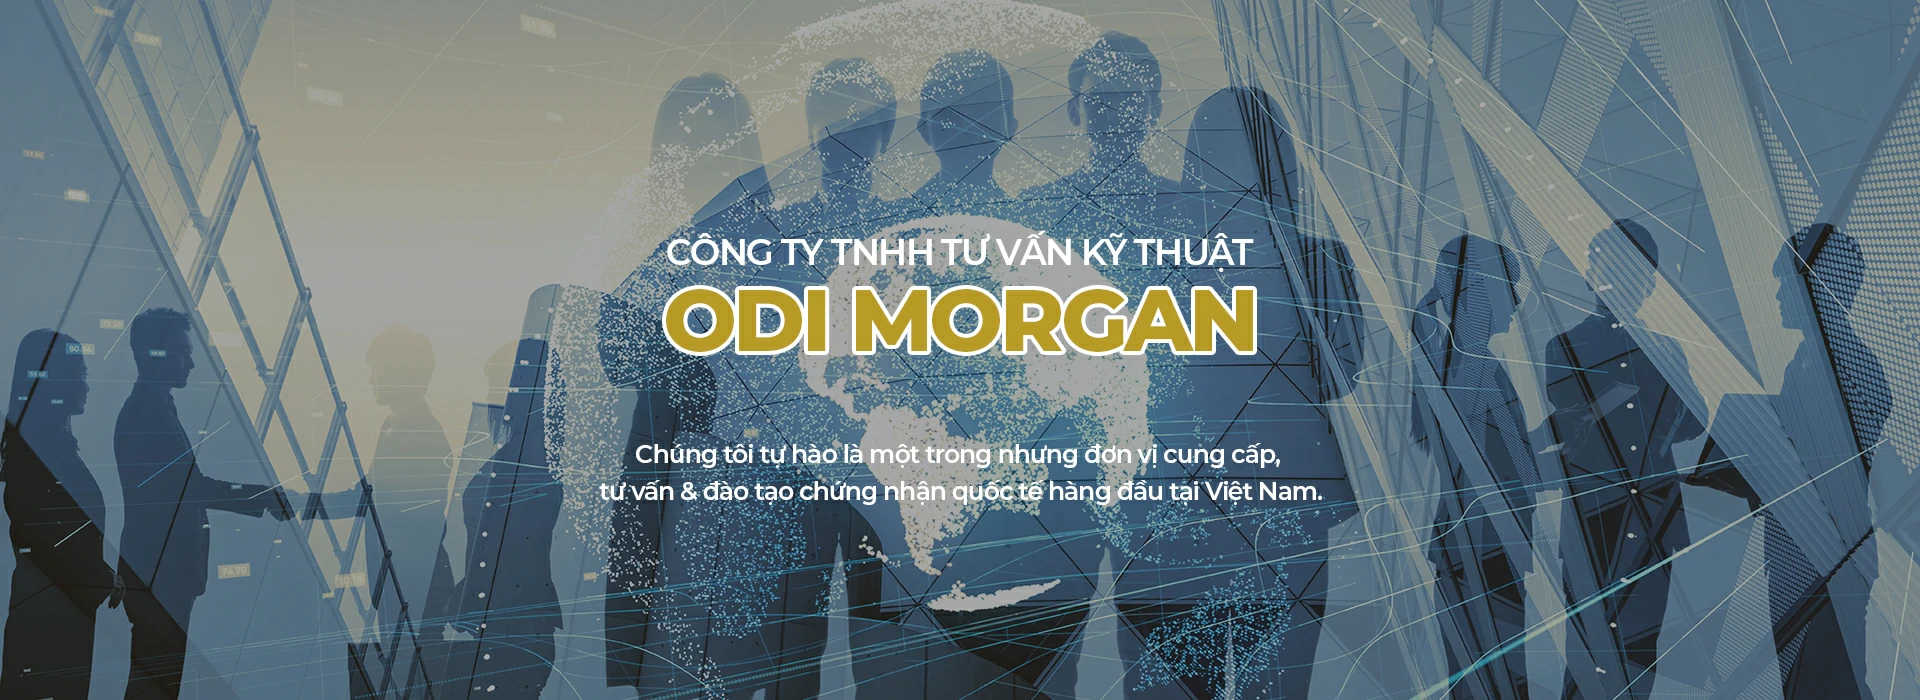 Slide giới thiệu Odi Morgan